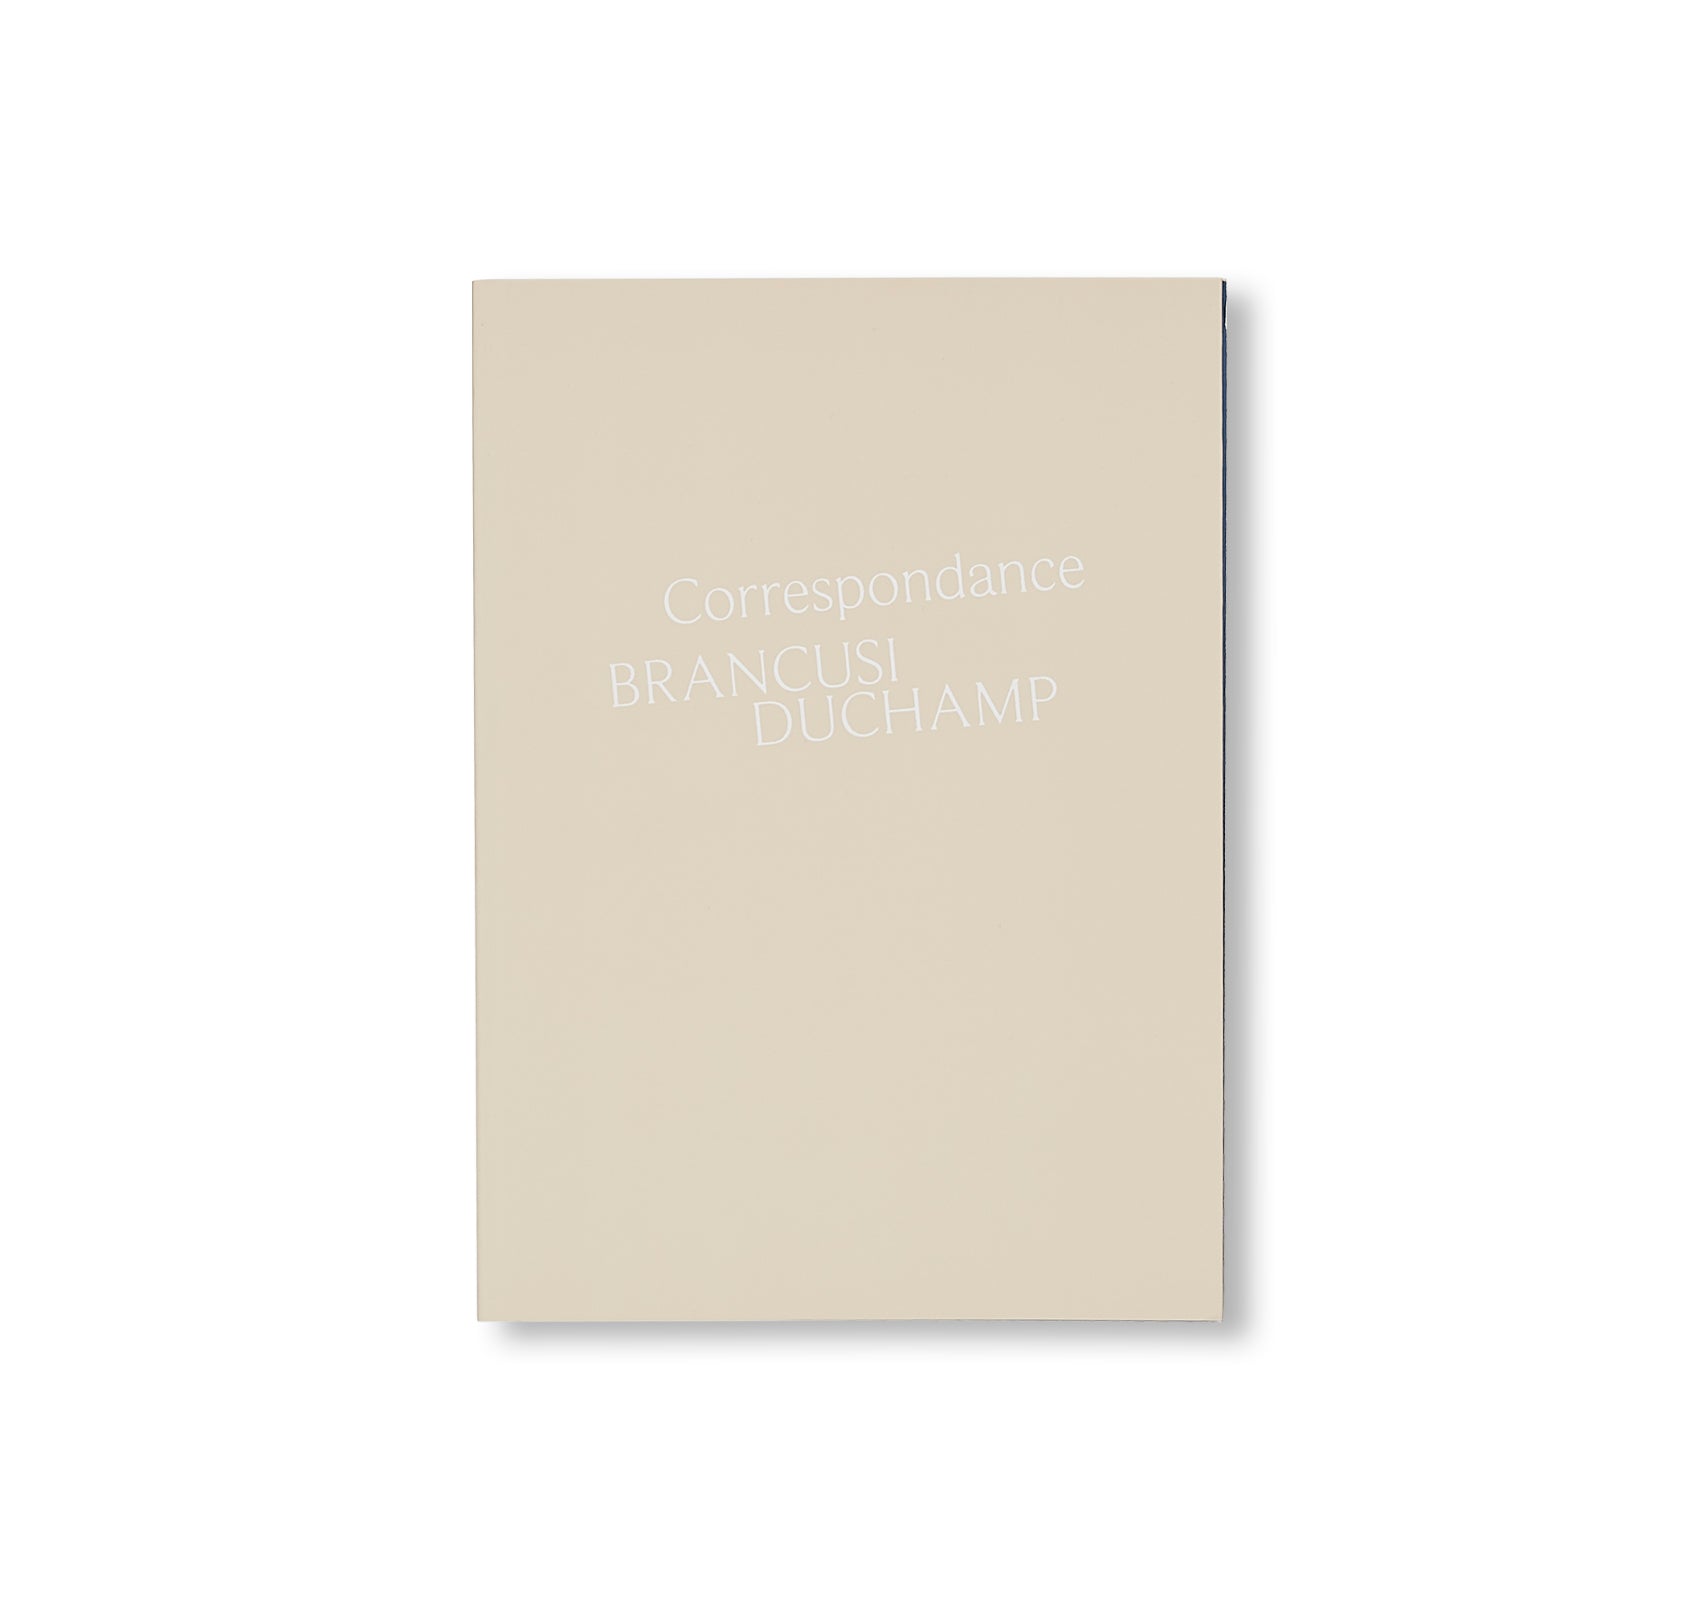 CORRESPONDANCE BRANCUSI DUCHAMP by Constantin Brancusi, Marcel Duchamp